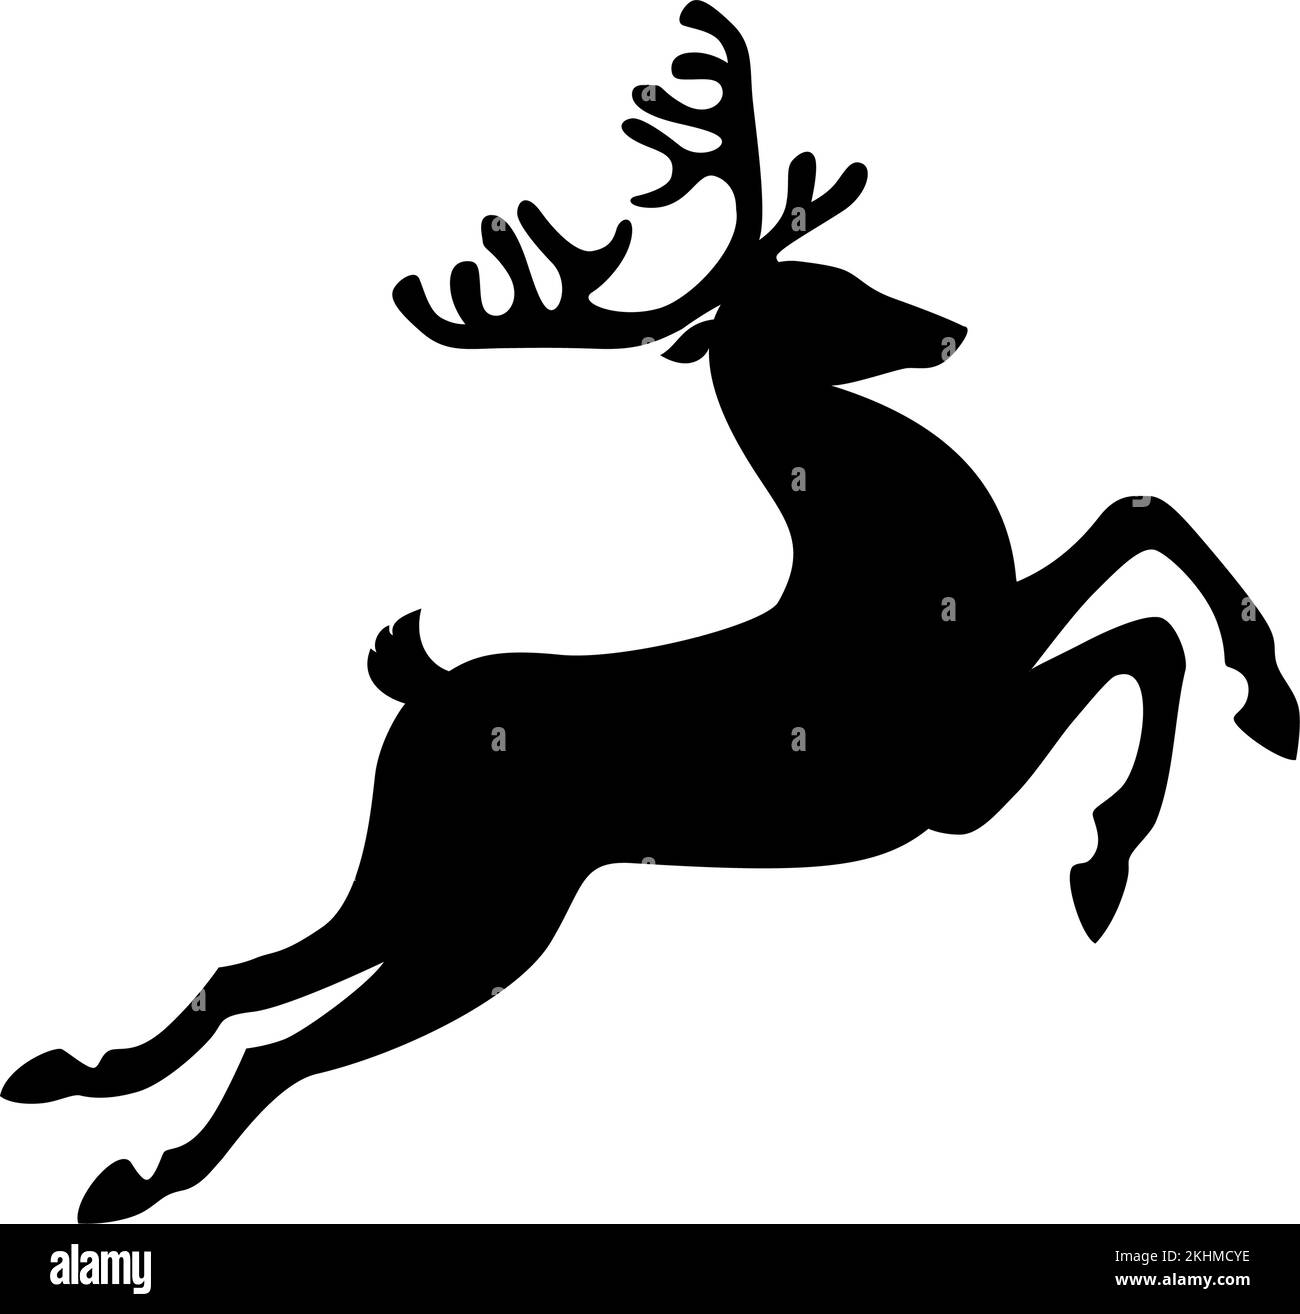 Running reindeer for Santa sleigh. Deer silhouette vector template Stock Vector